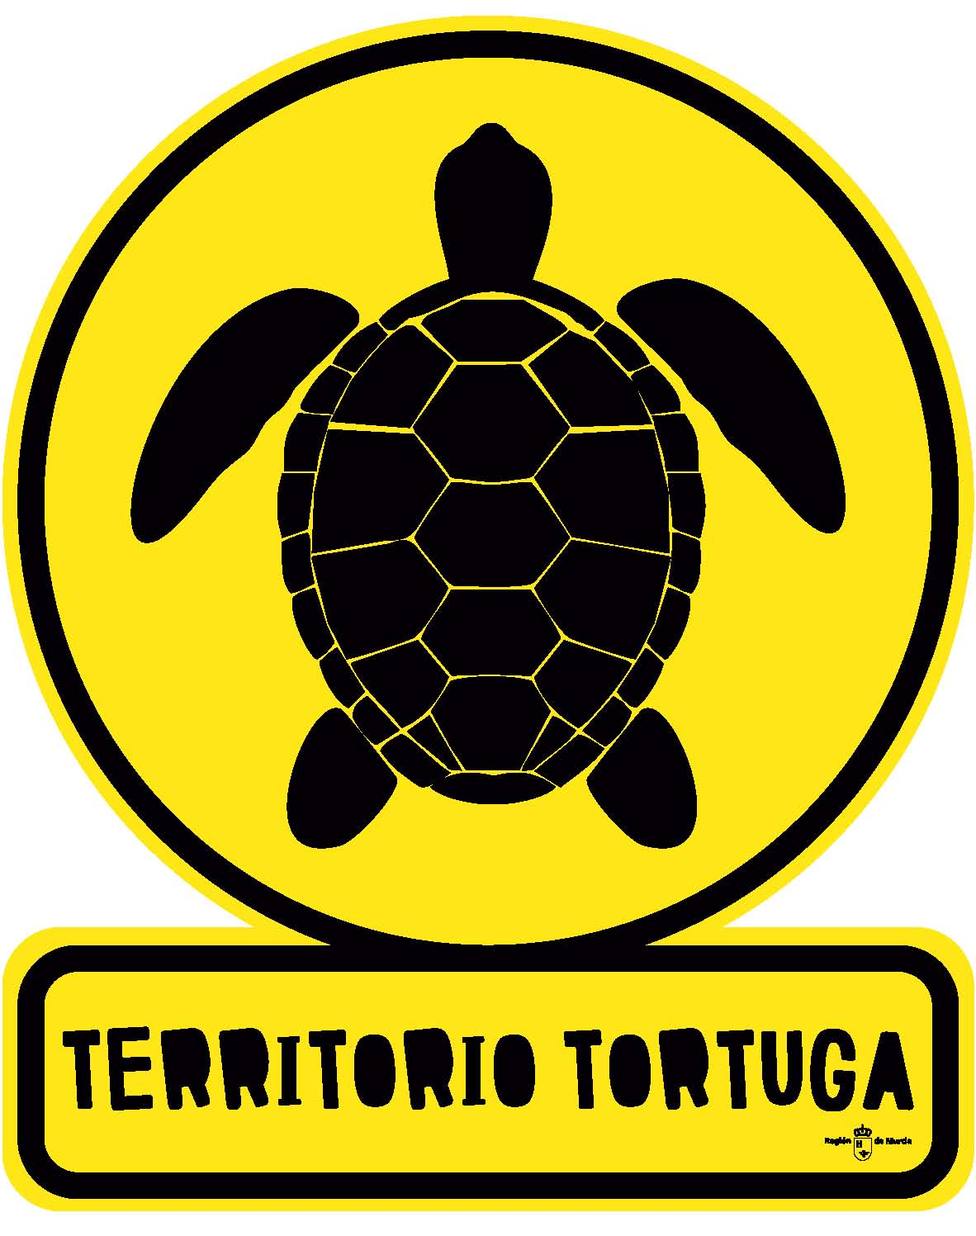 Águilas se suma a la campaña “Territorio Tortuga 2021